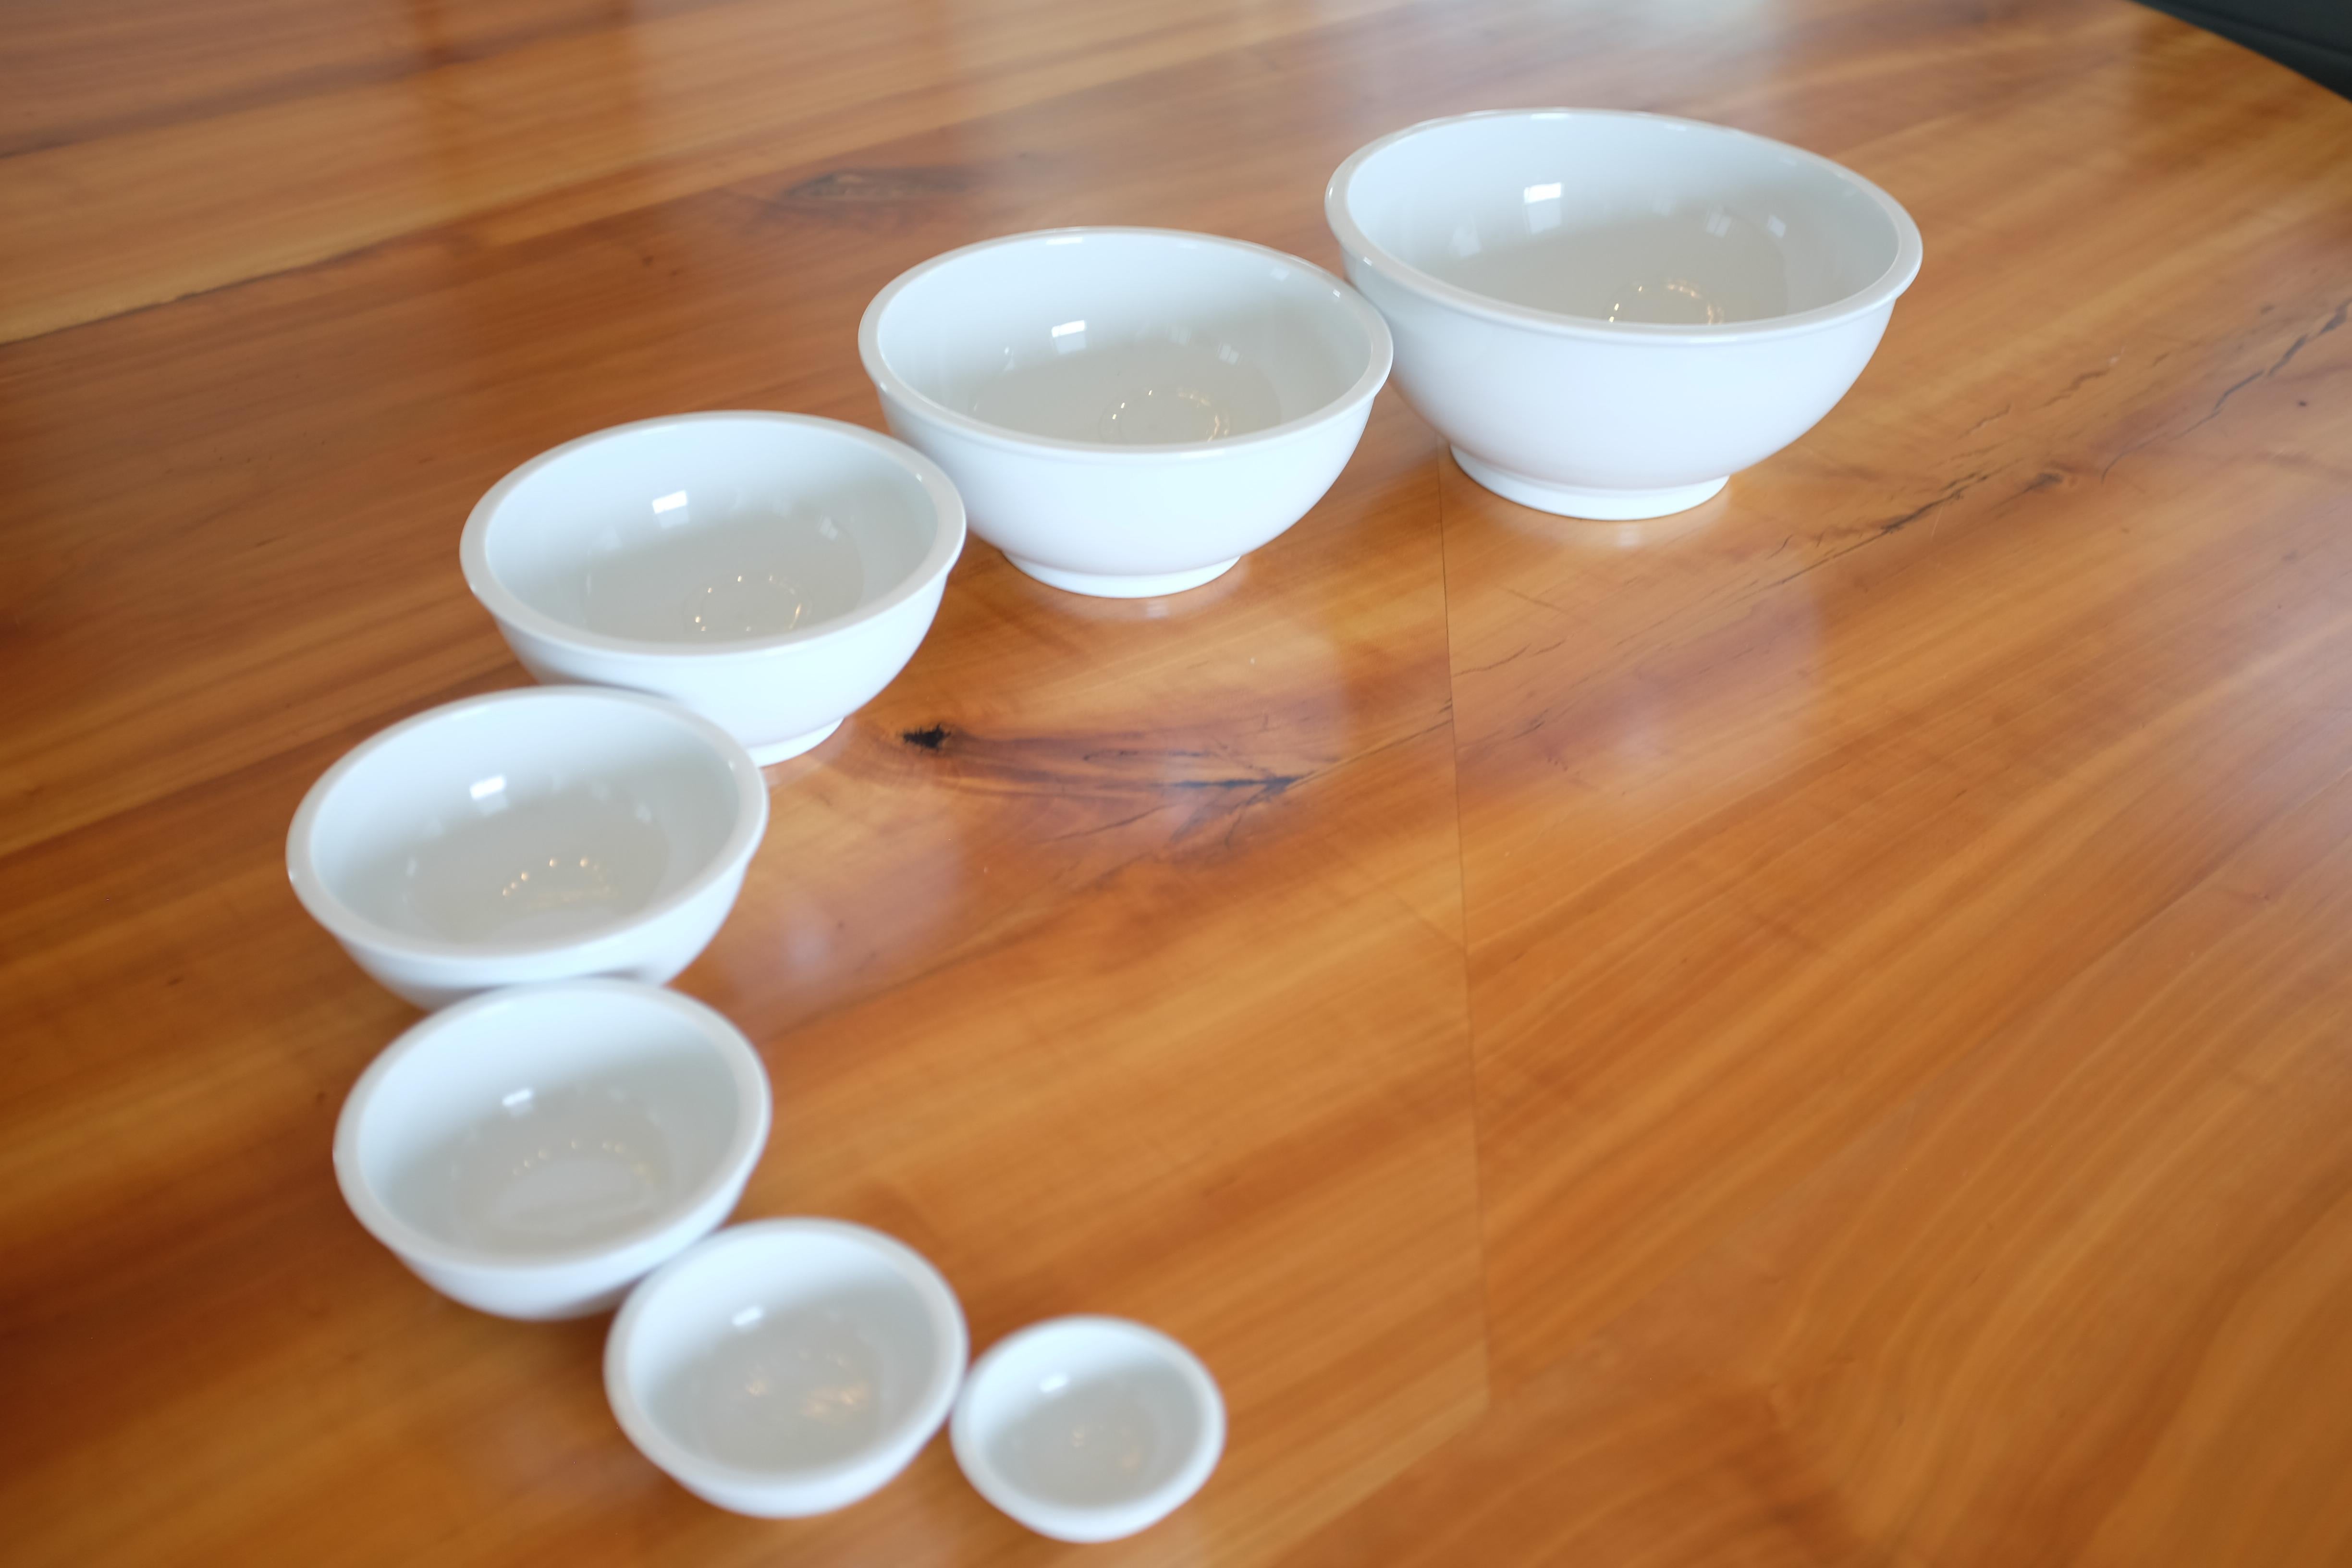 Belgian Studio Pieter Stockmans 7 in 1 White Bowls For Sale